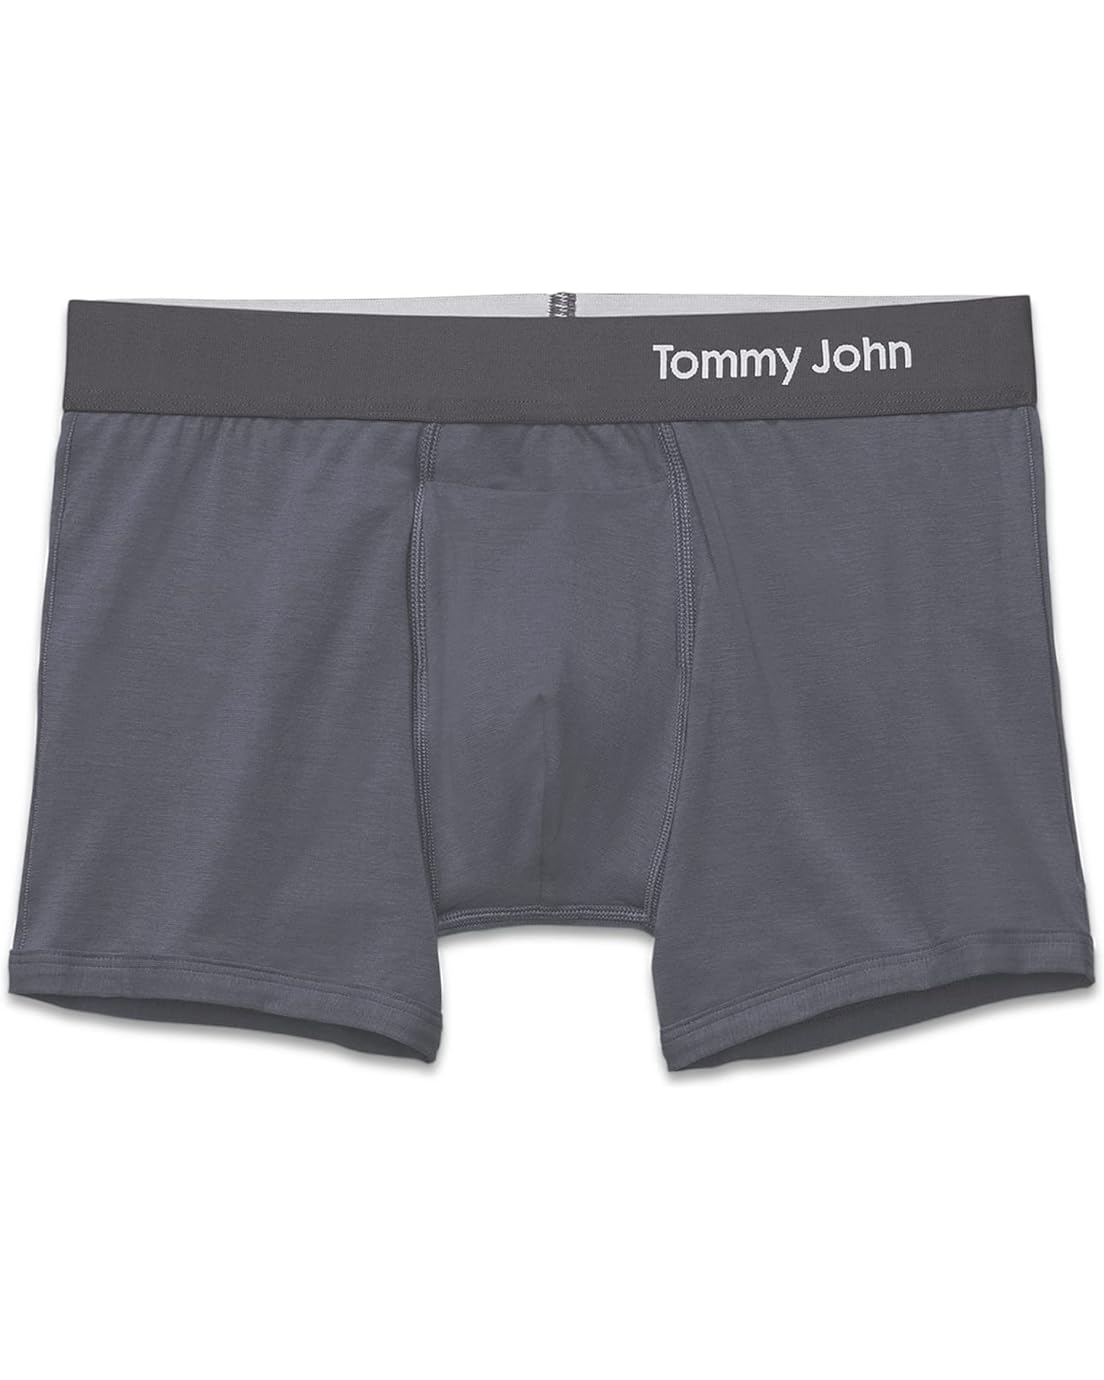  Tommy John Cool Cotton Trunks 4